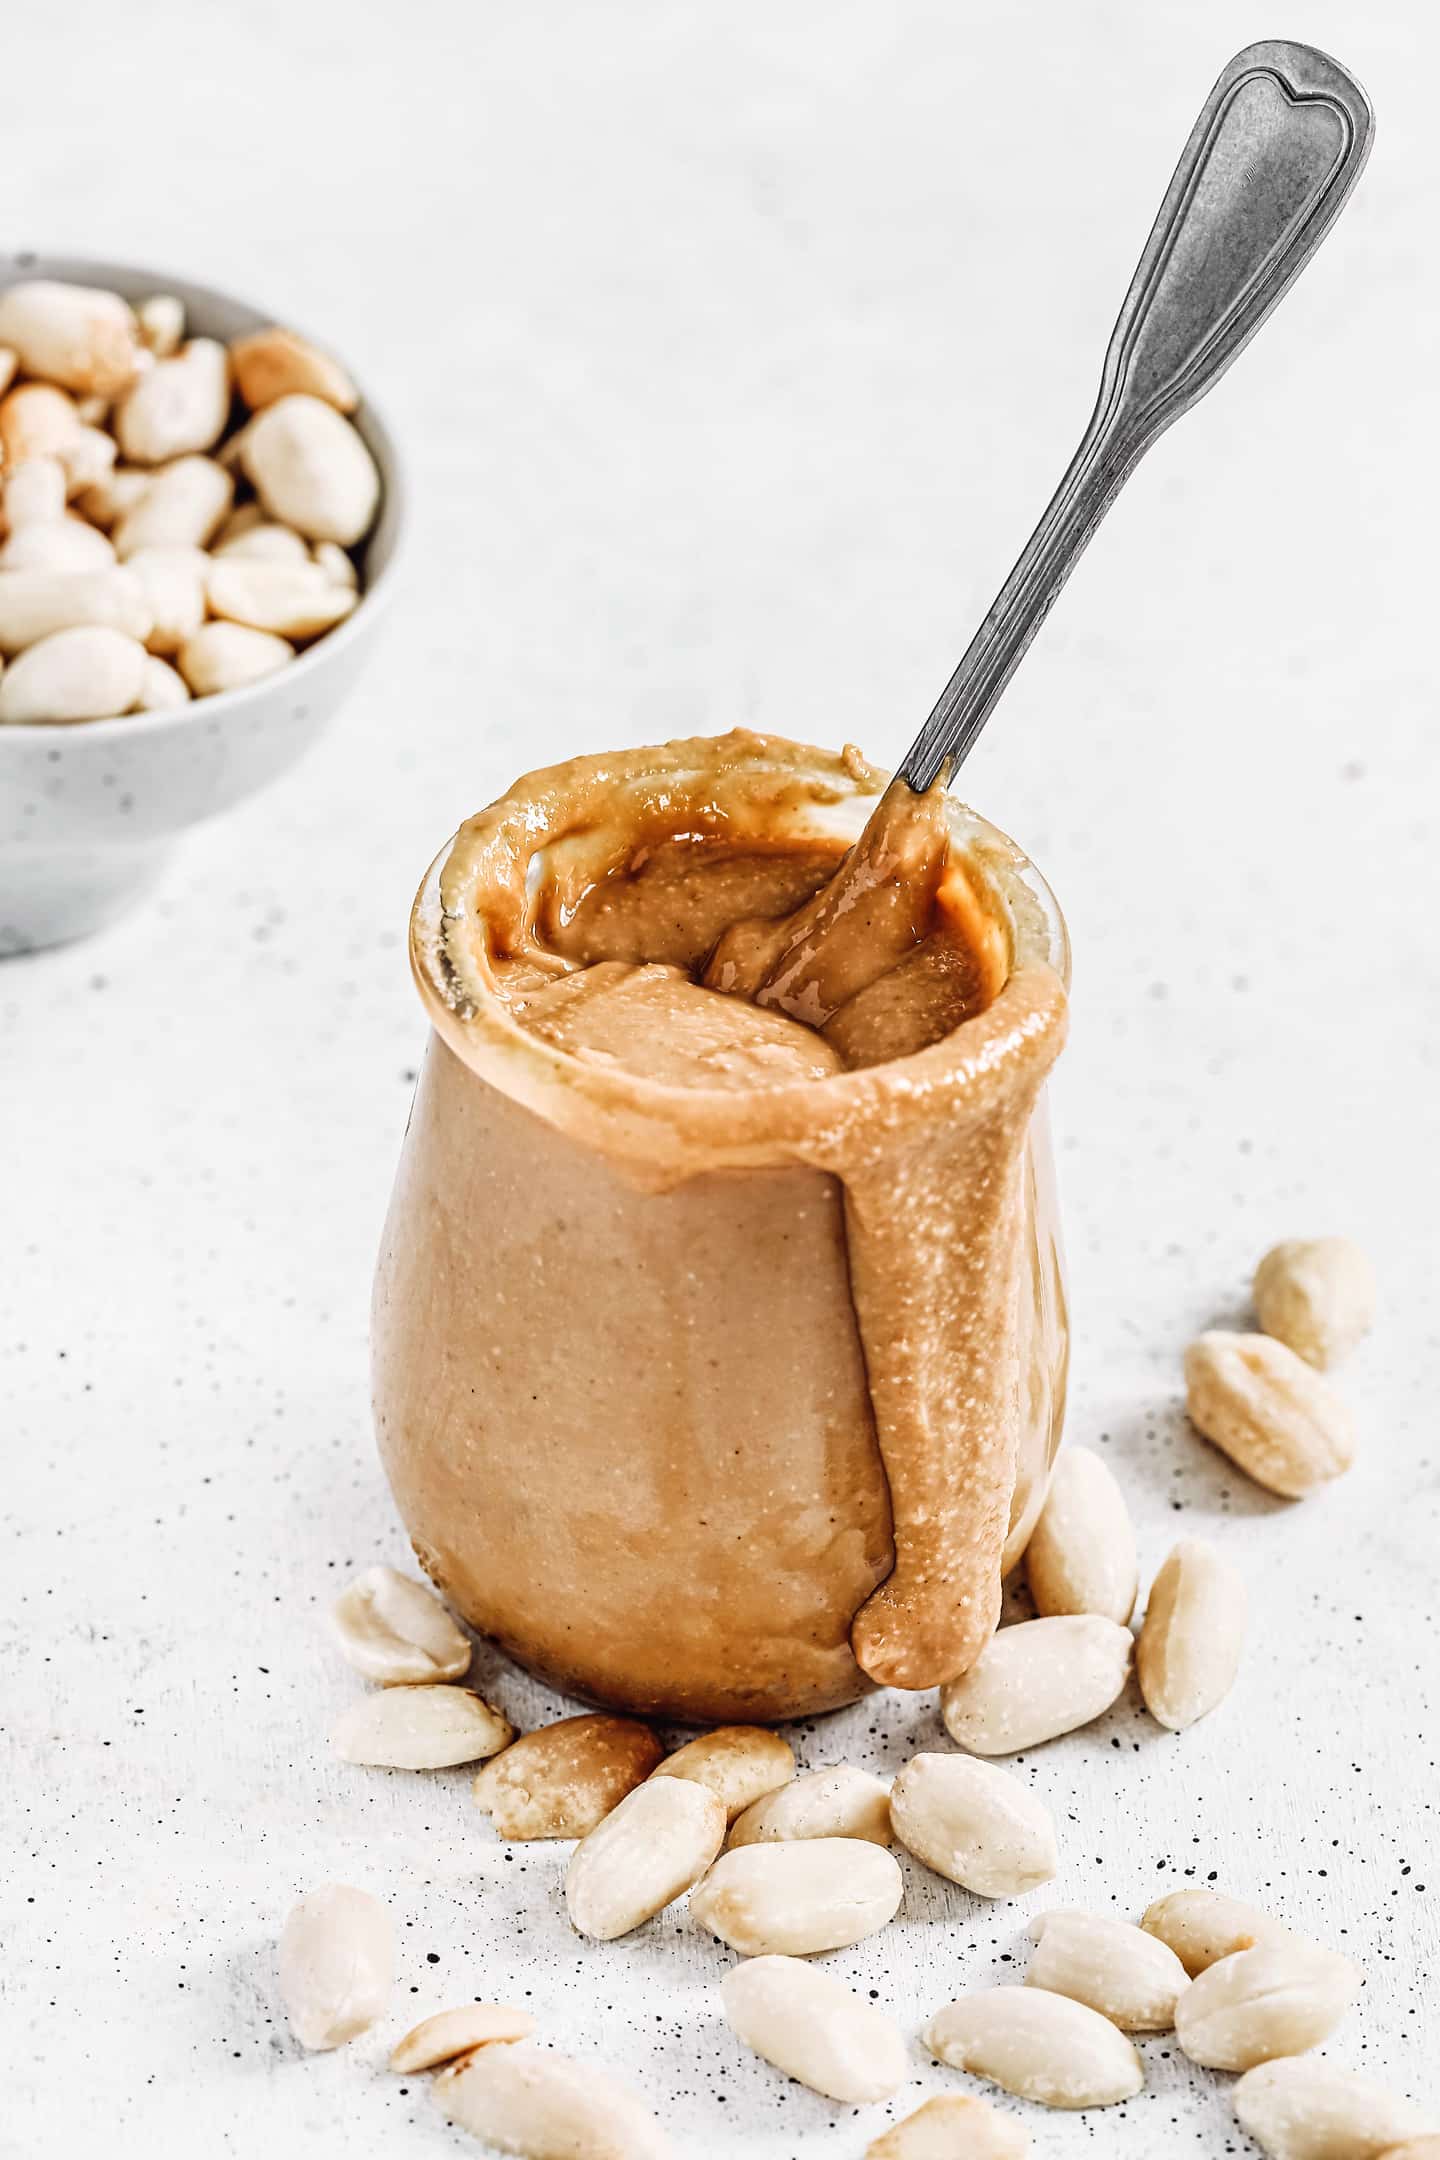 Best creamy peanut butter recipe